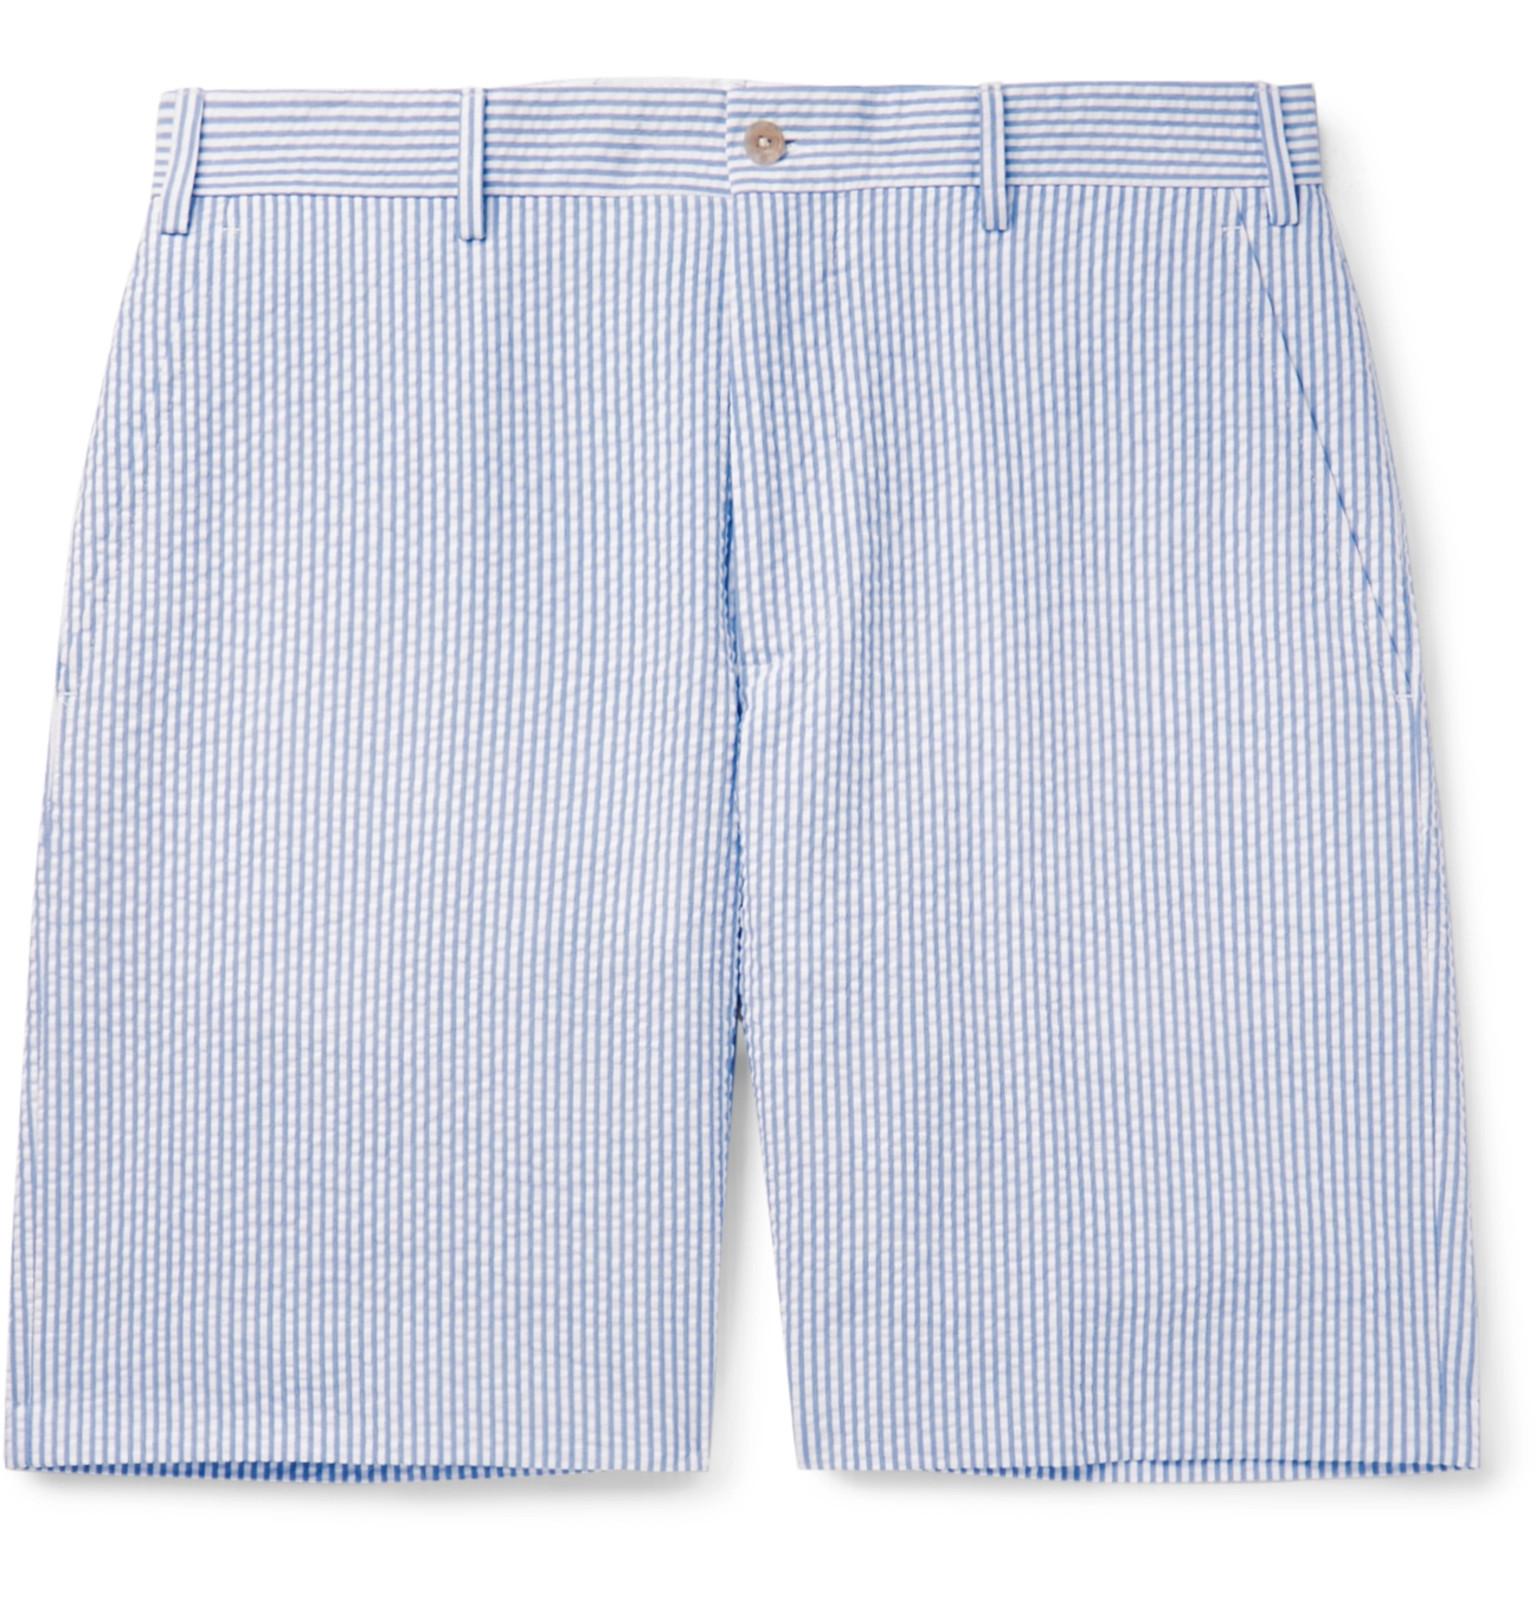 Anderson & Sheppard Striped Cotton-seersucker Shorts in Blue for Men - Lyst